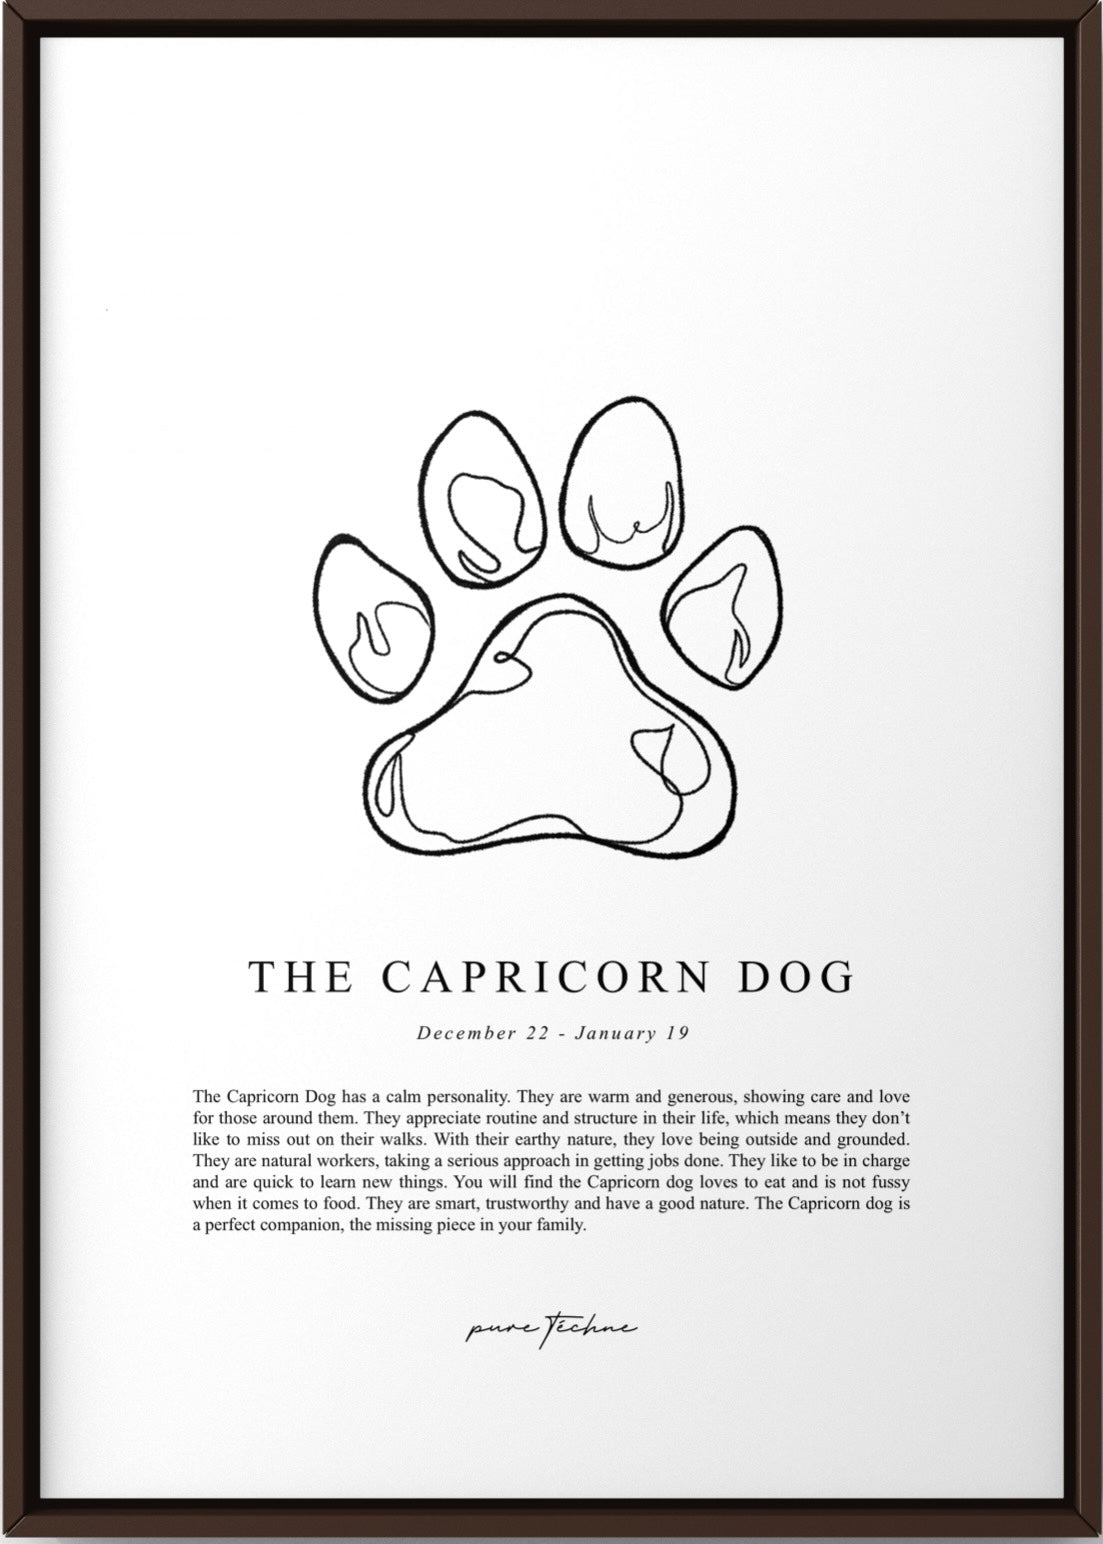 The 'Capricorn' Dog